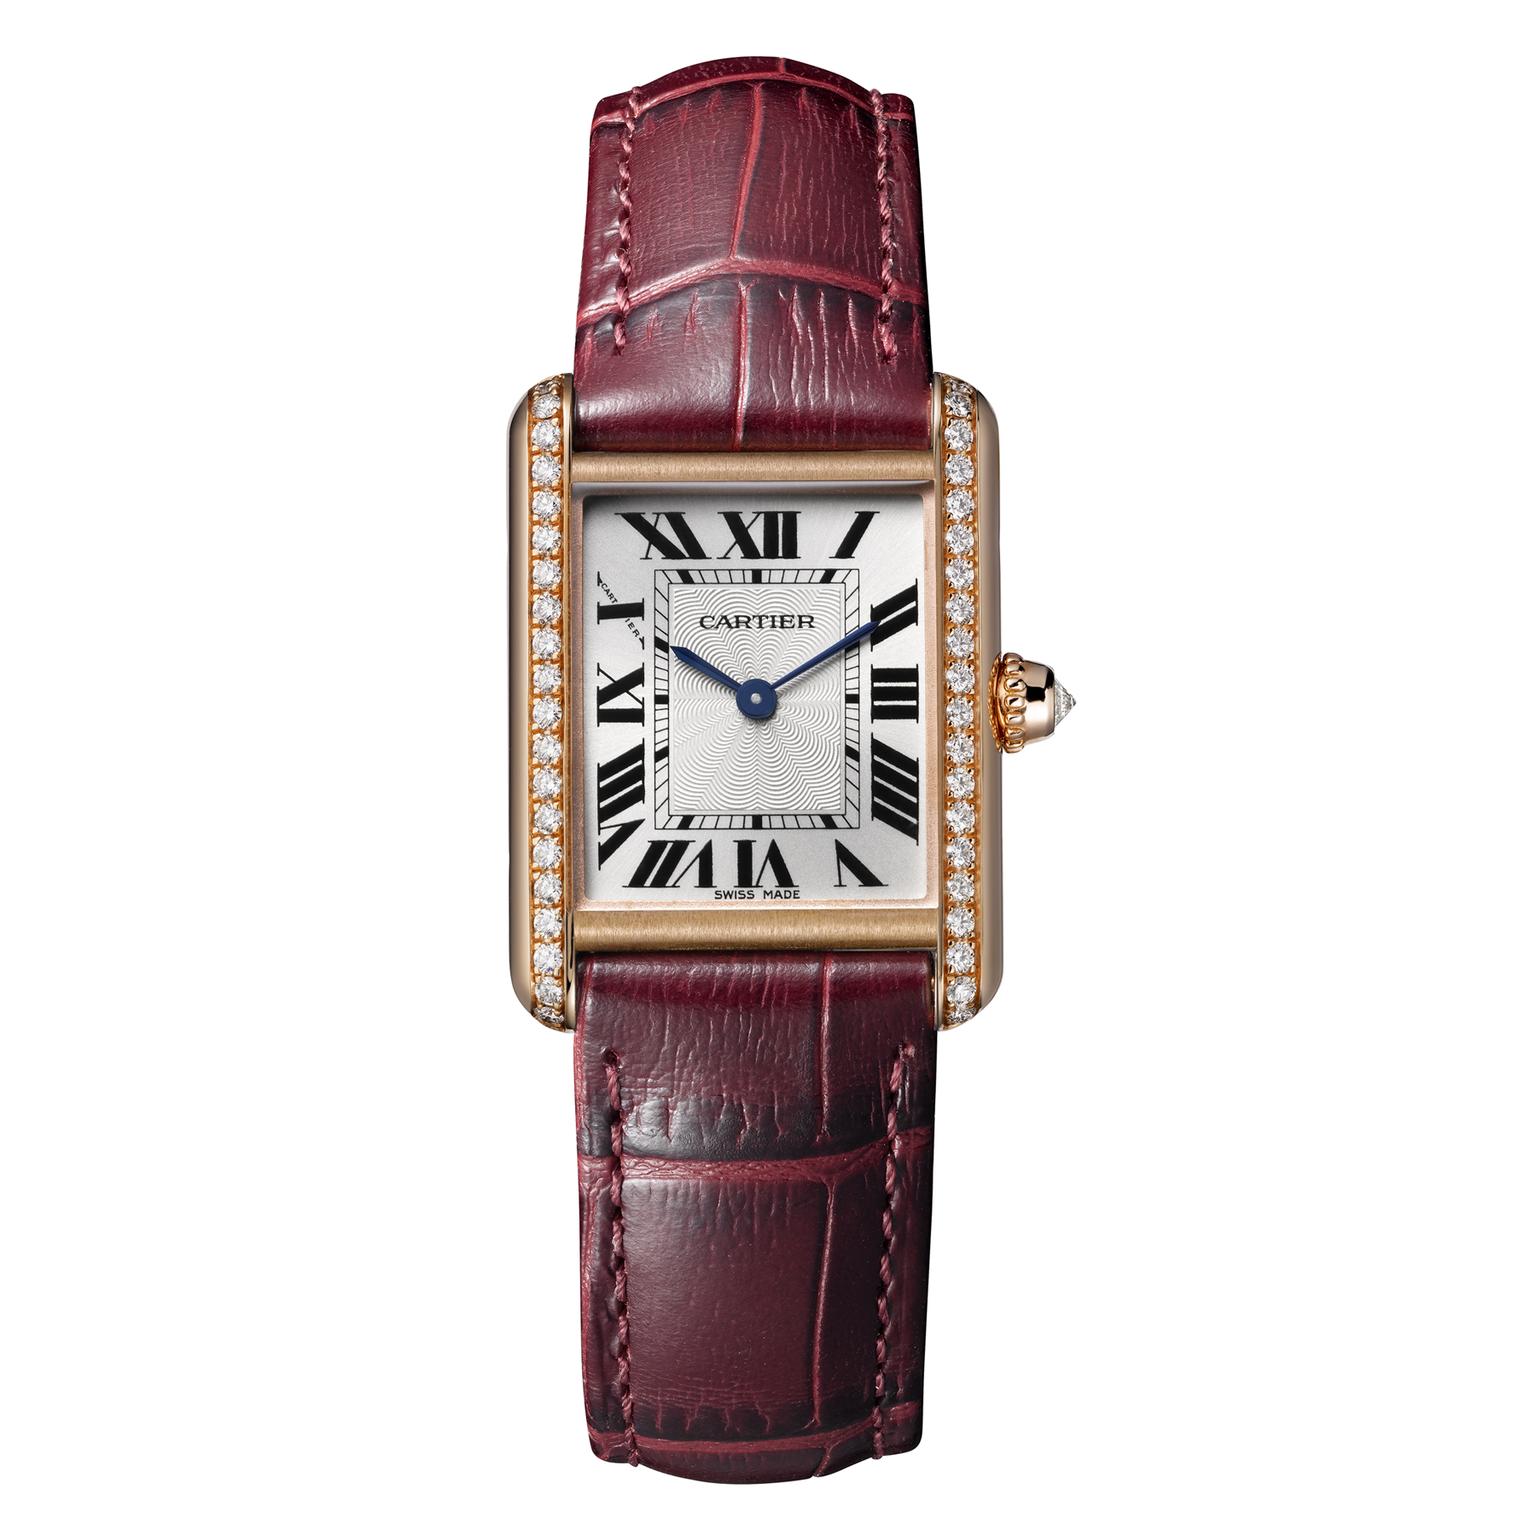 Cartier Tank Louis Cartier small pink gold watch with diamonds